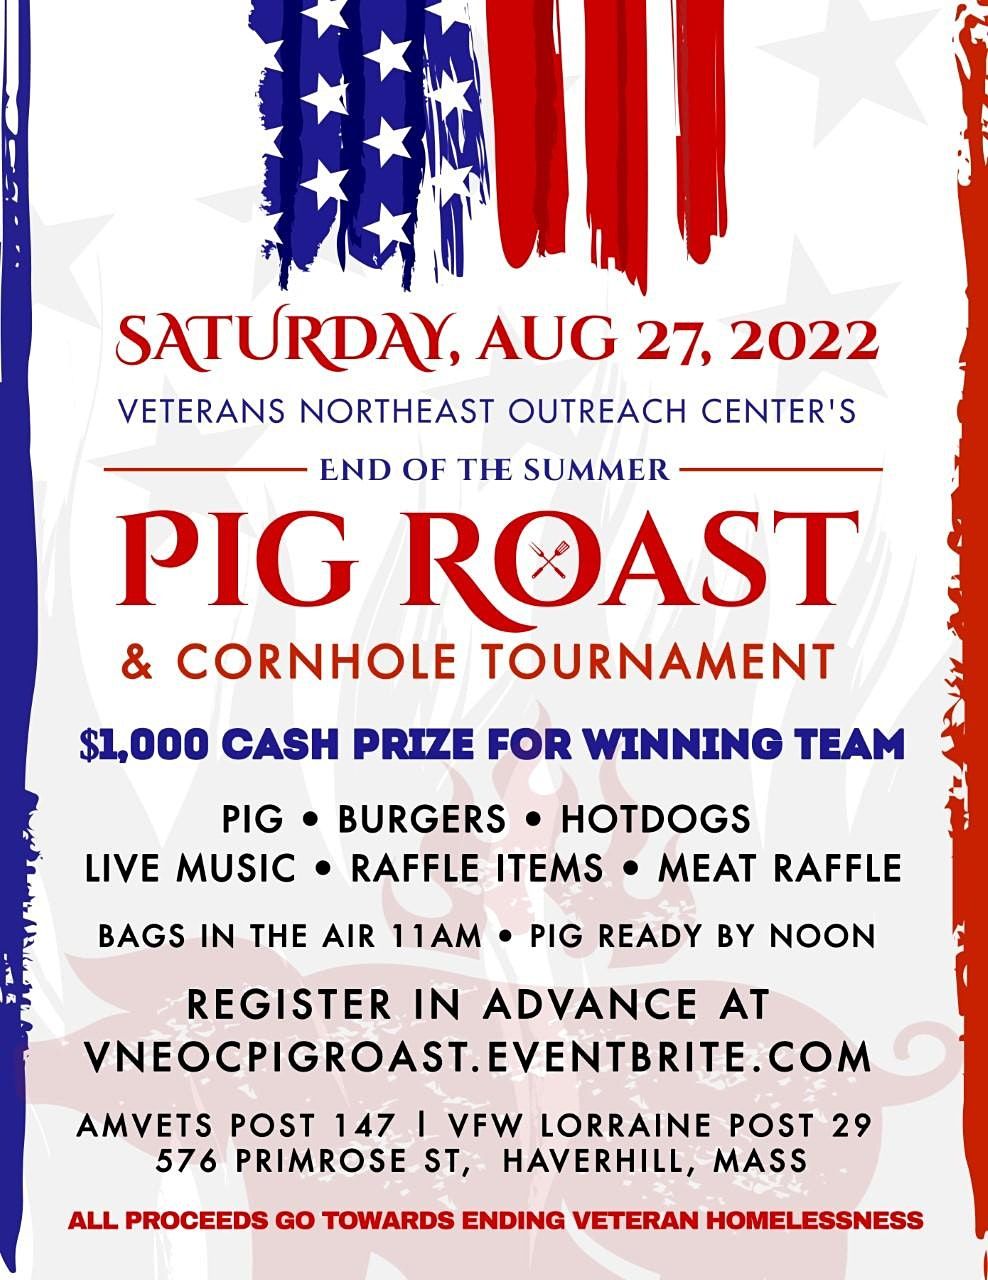 Pig Roast and Corn Hole Tournament